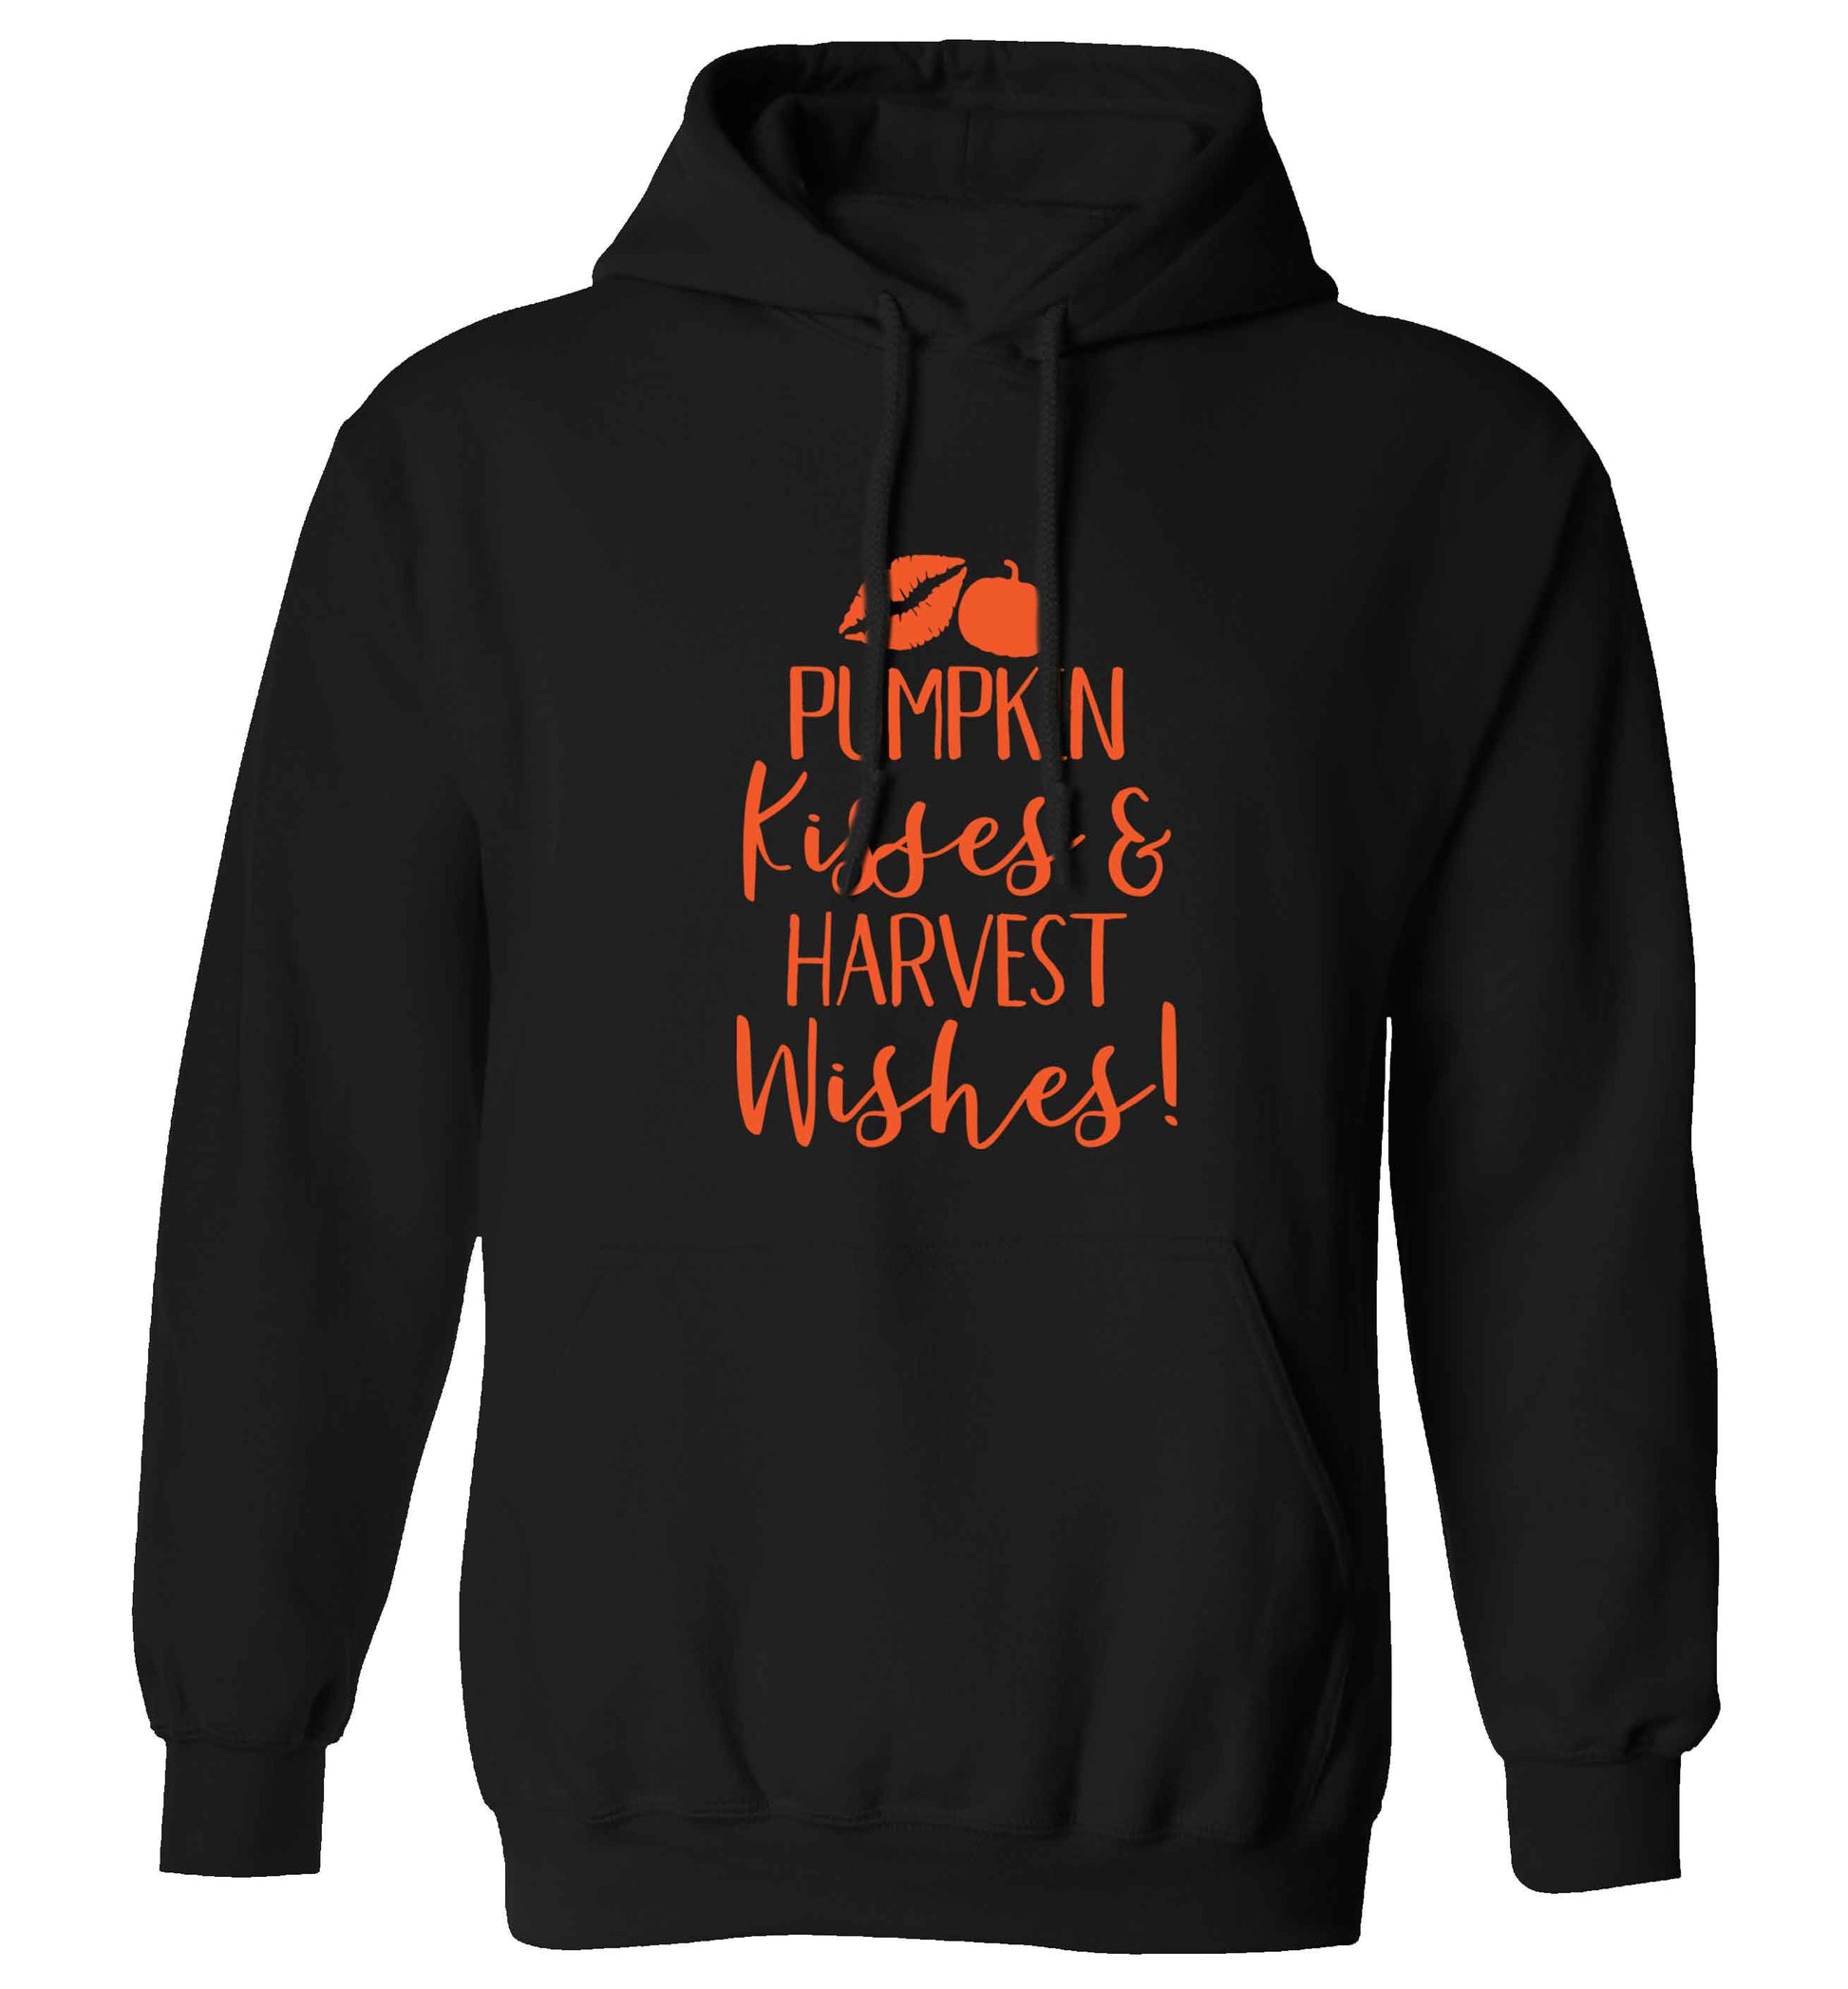 Pumpkin Kisses Harvest adults unisex black hoodie 2XL